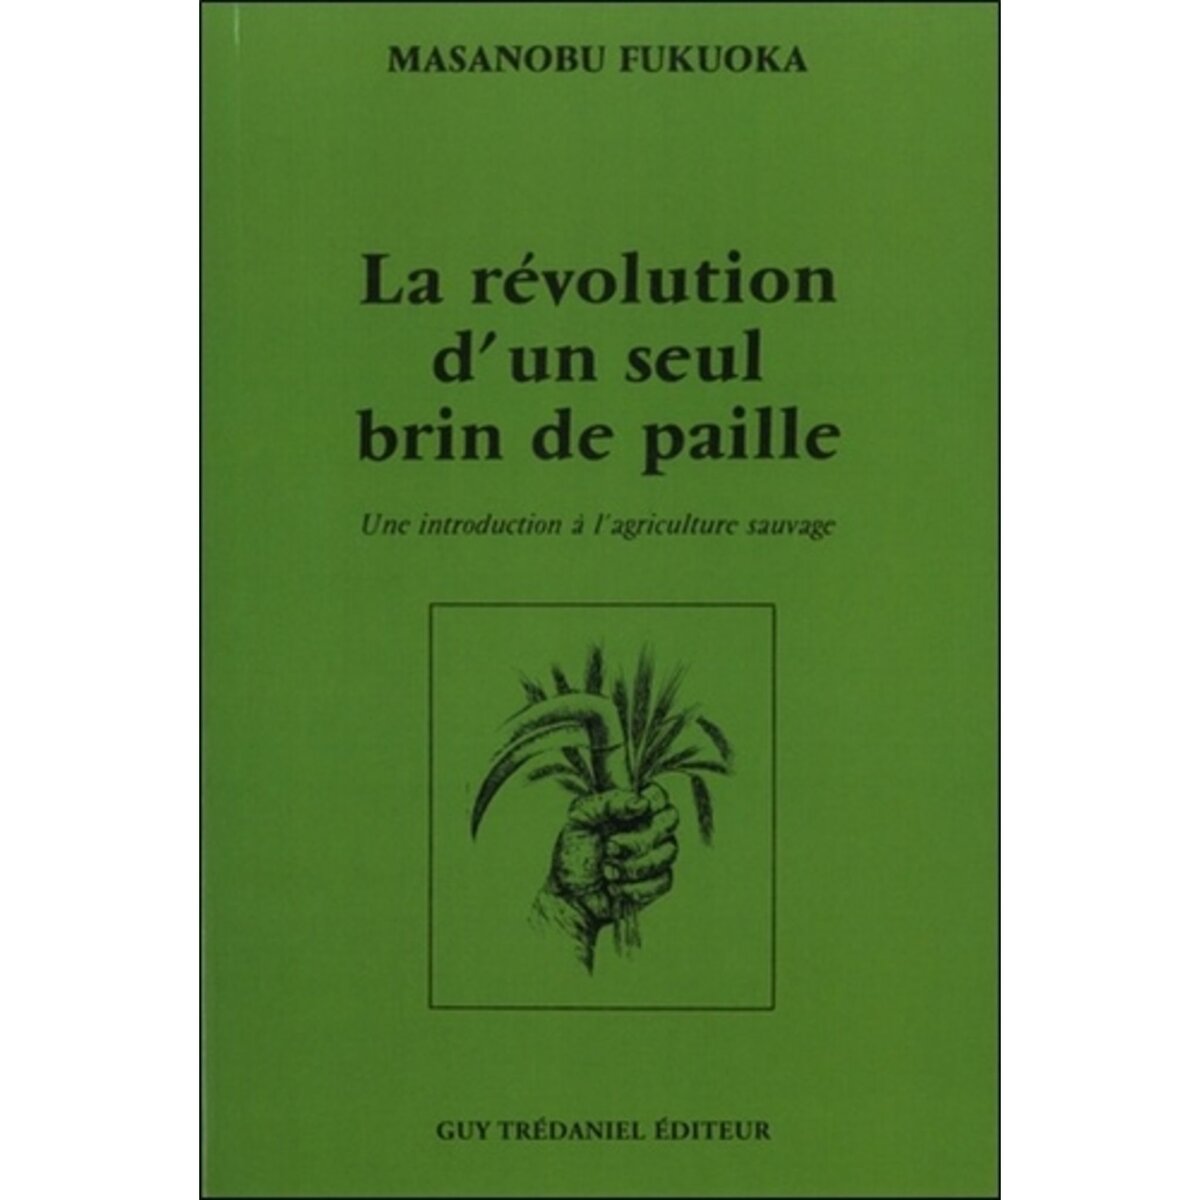  LA REVOLUTION D'UN SEUL BRIN DE PAILLE. UNE INTRODUCTION A L'AGRICULTURE SAUVAGE, 3E EDITION, Fukuoka Masanobu